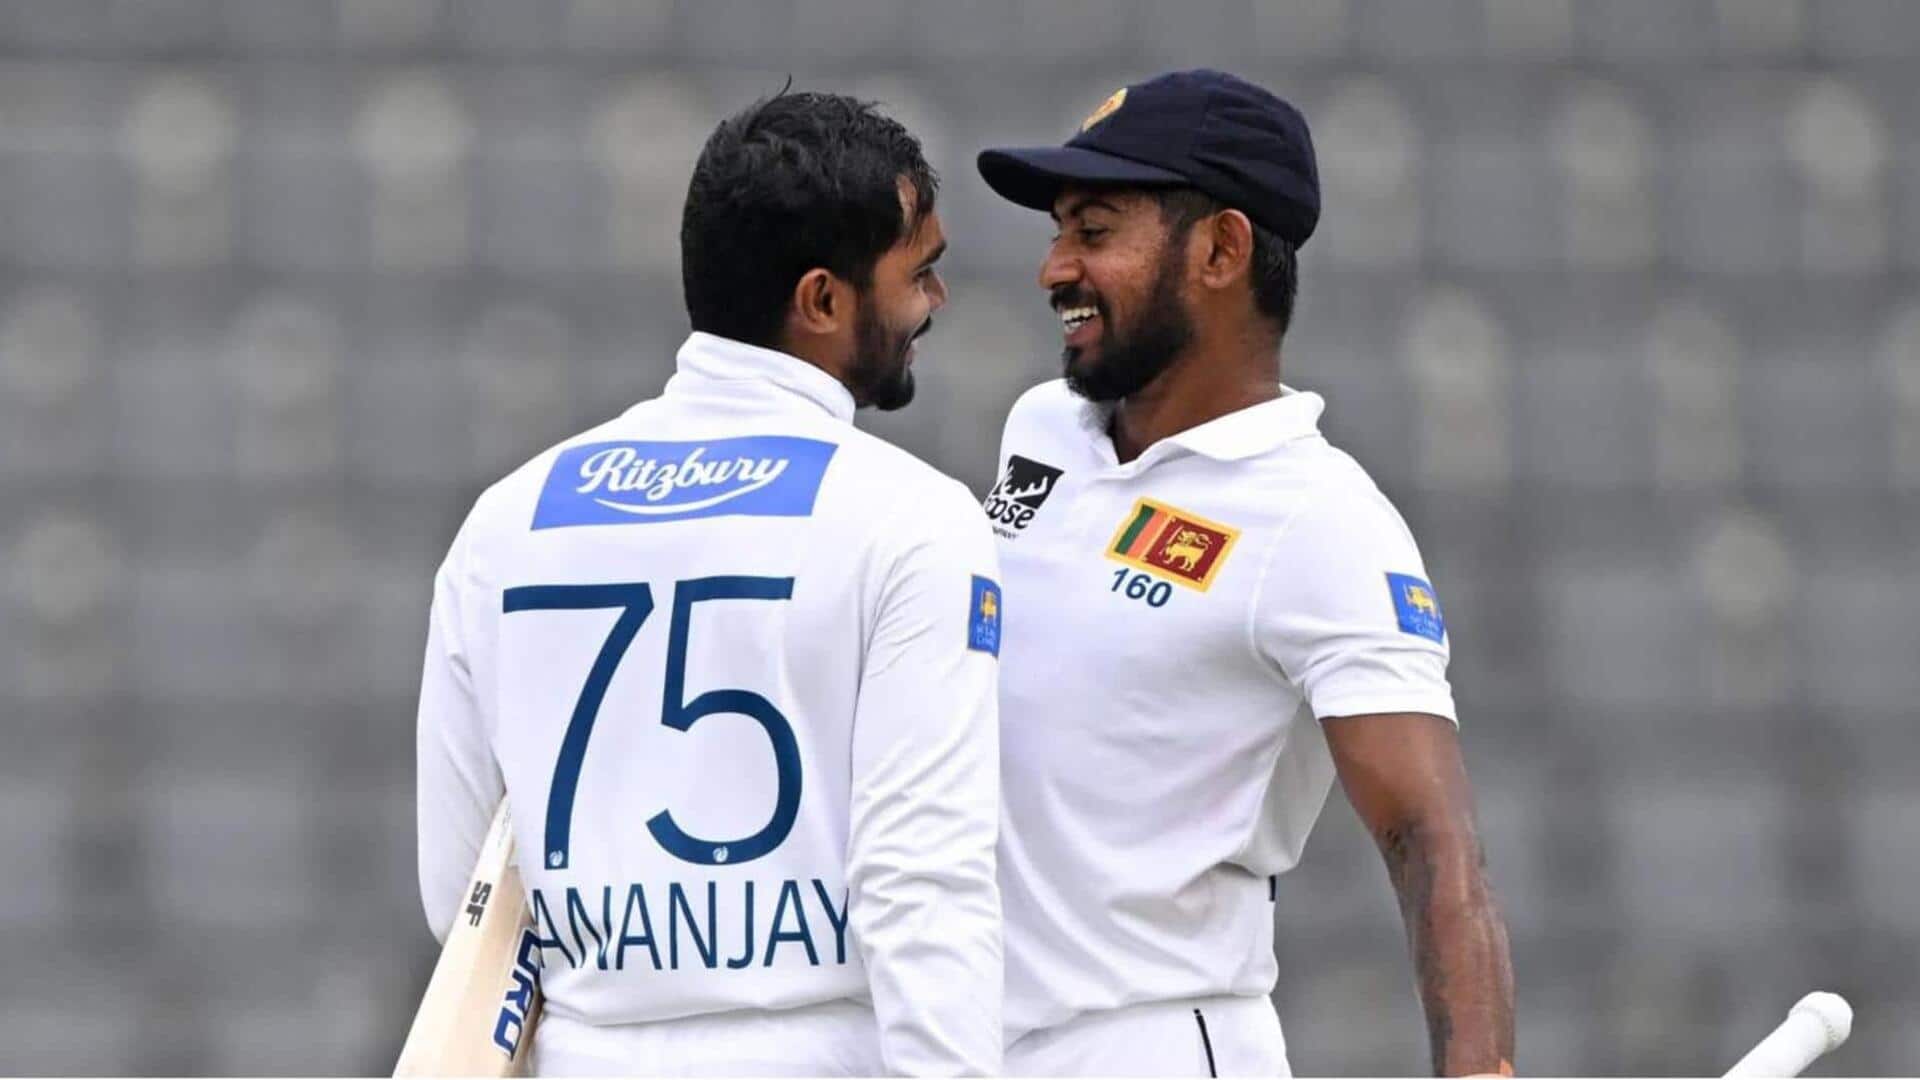 Dominant Sri Lanka demolish Bangladesh in 1st Test: Key stats